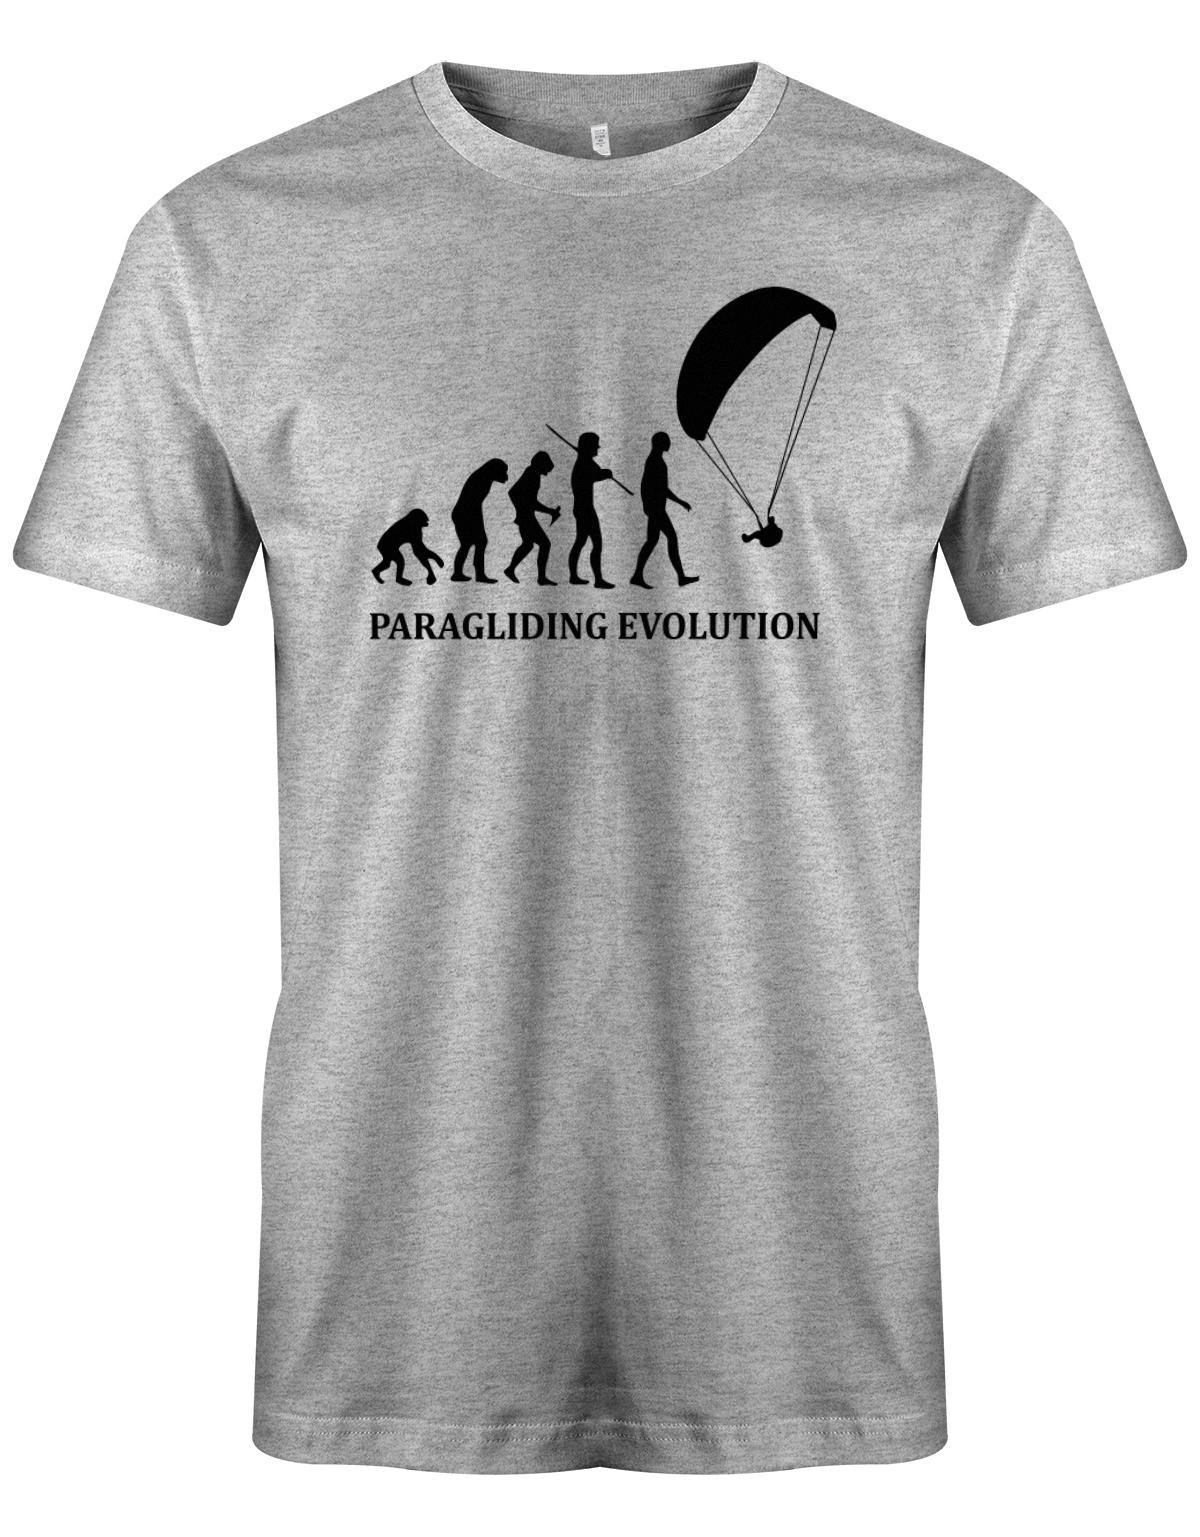 Paragliding-Evolution-herren-Shirt-Grau